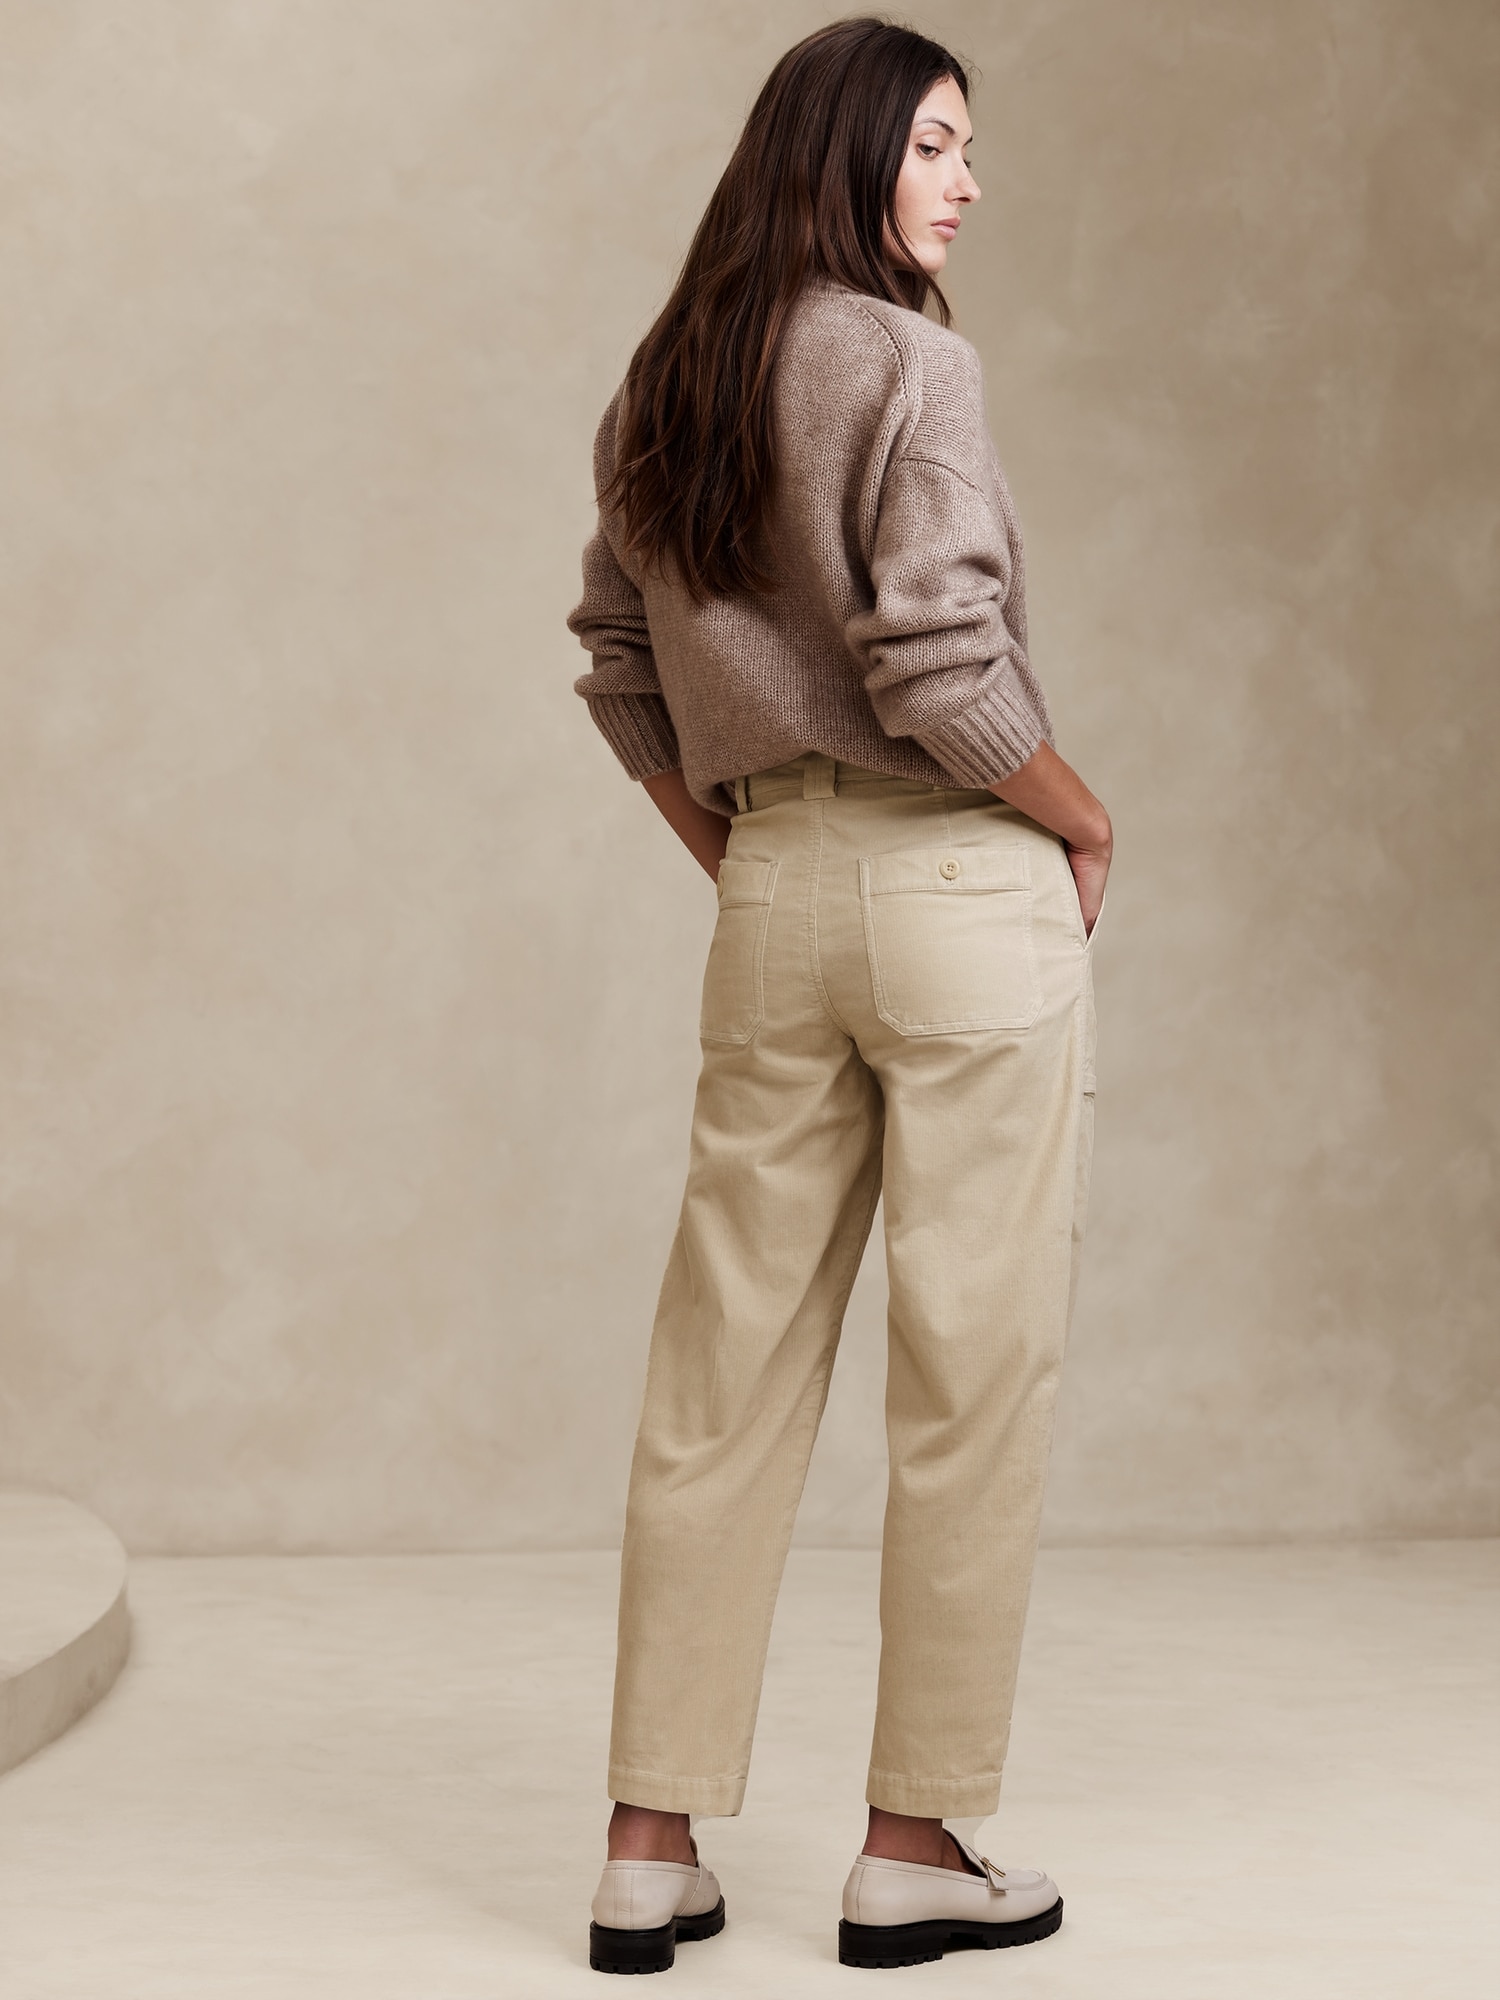 The Fatigue Barrel Pant  Pants, Pants for women, Clothes